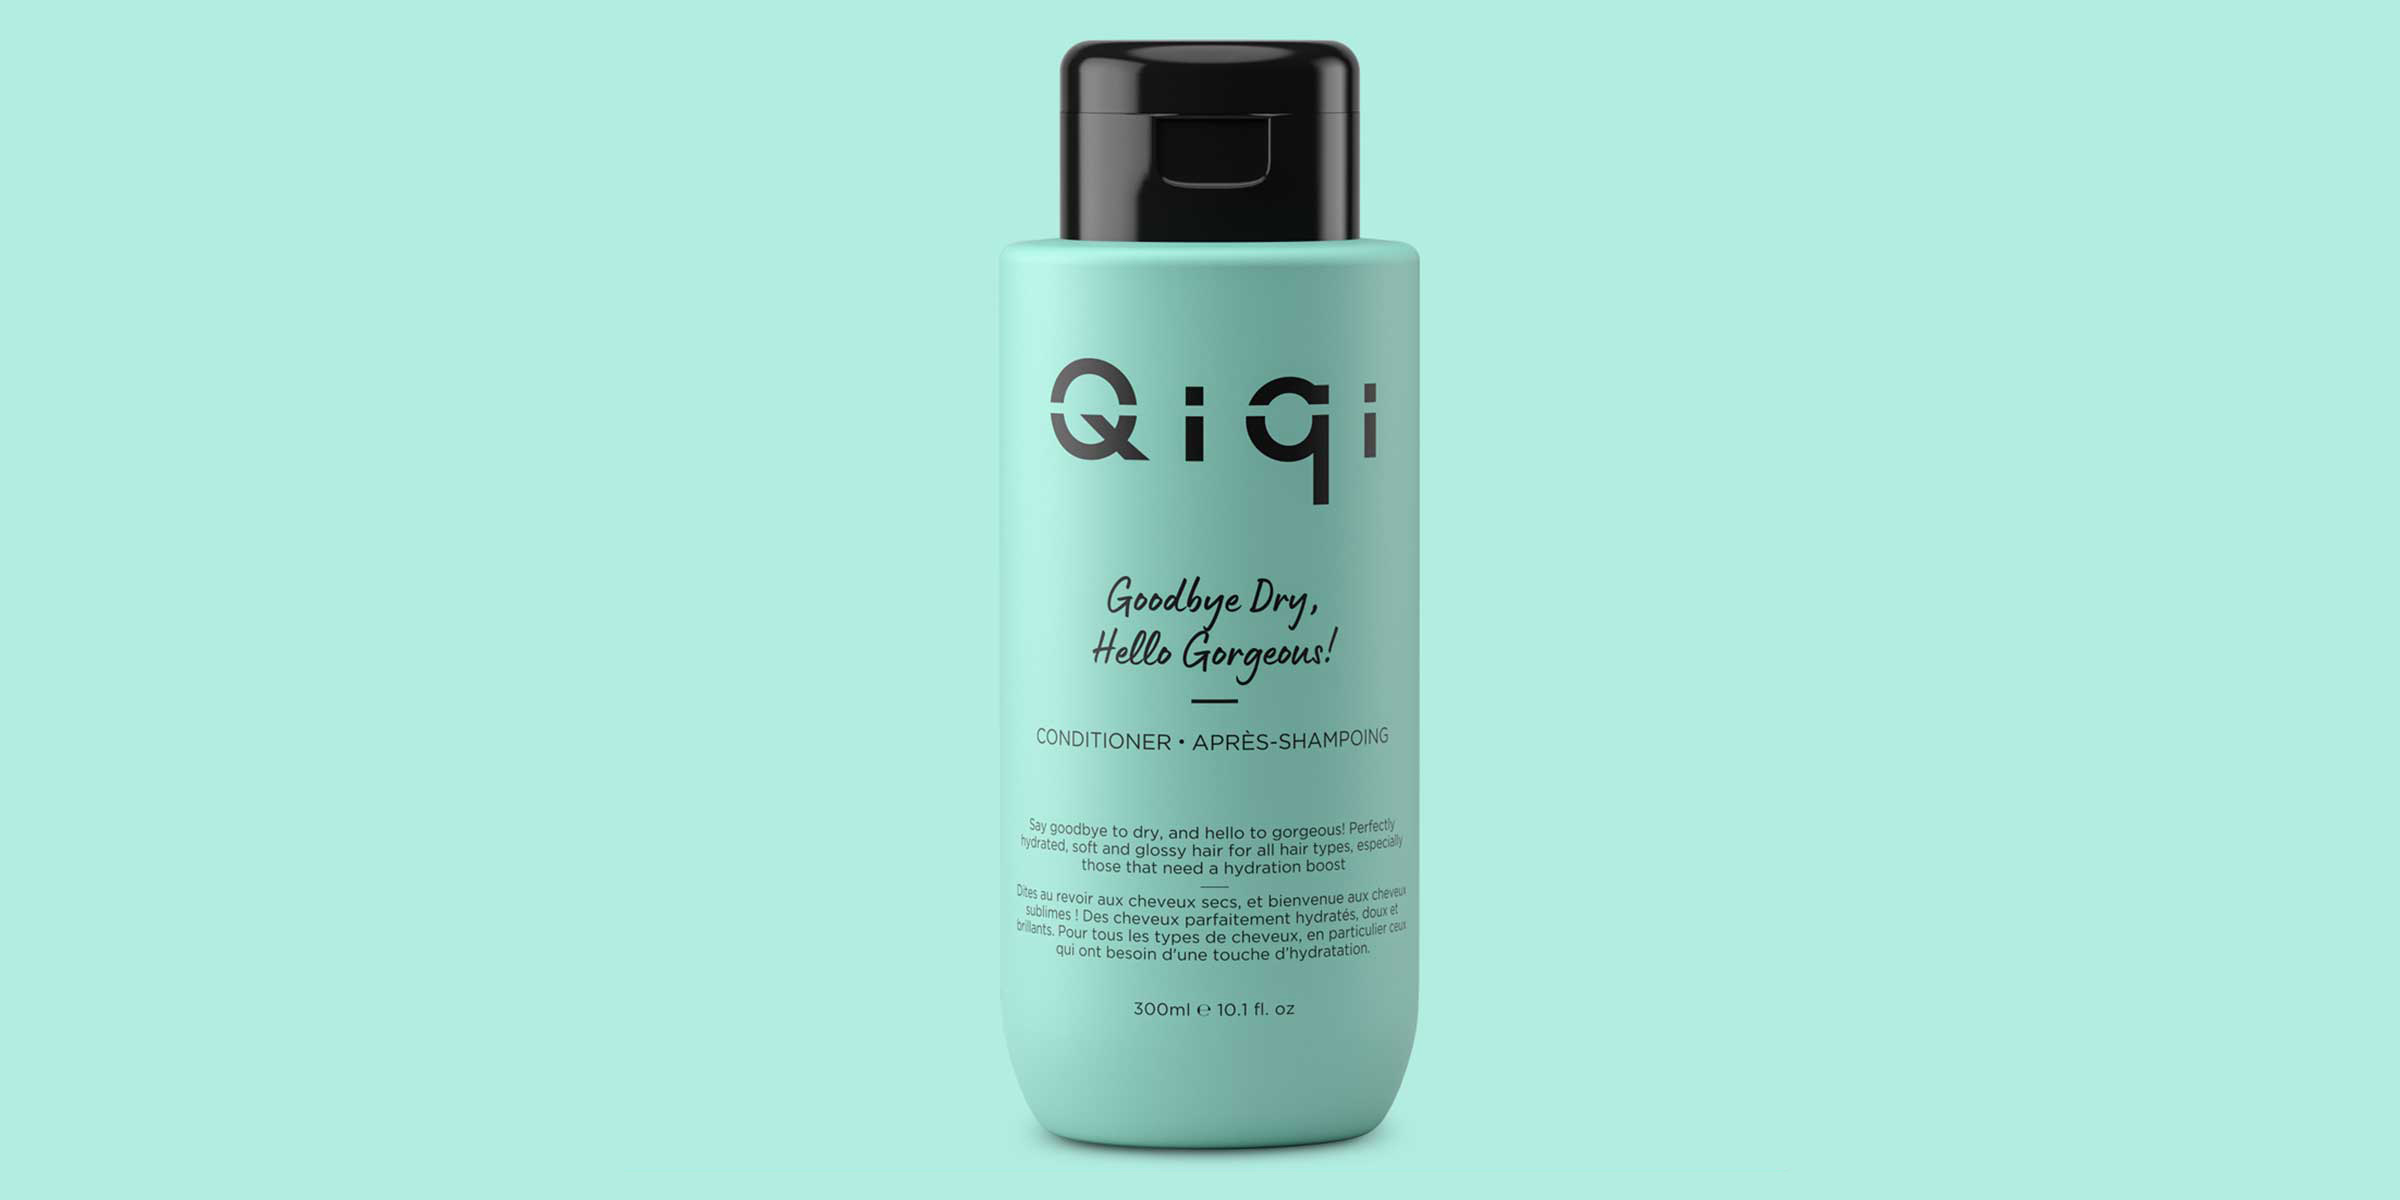 Qiqi hair care products Australia